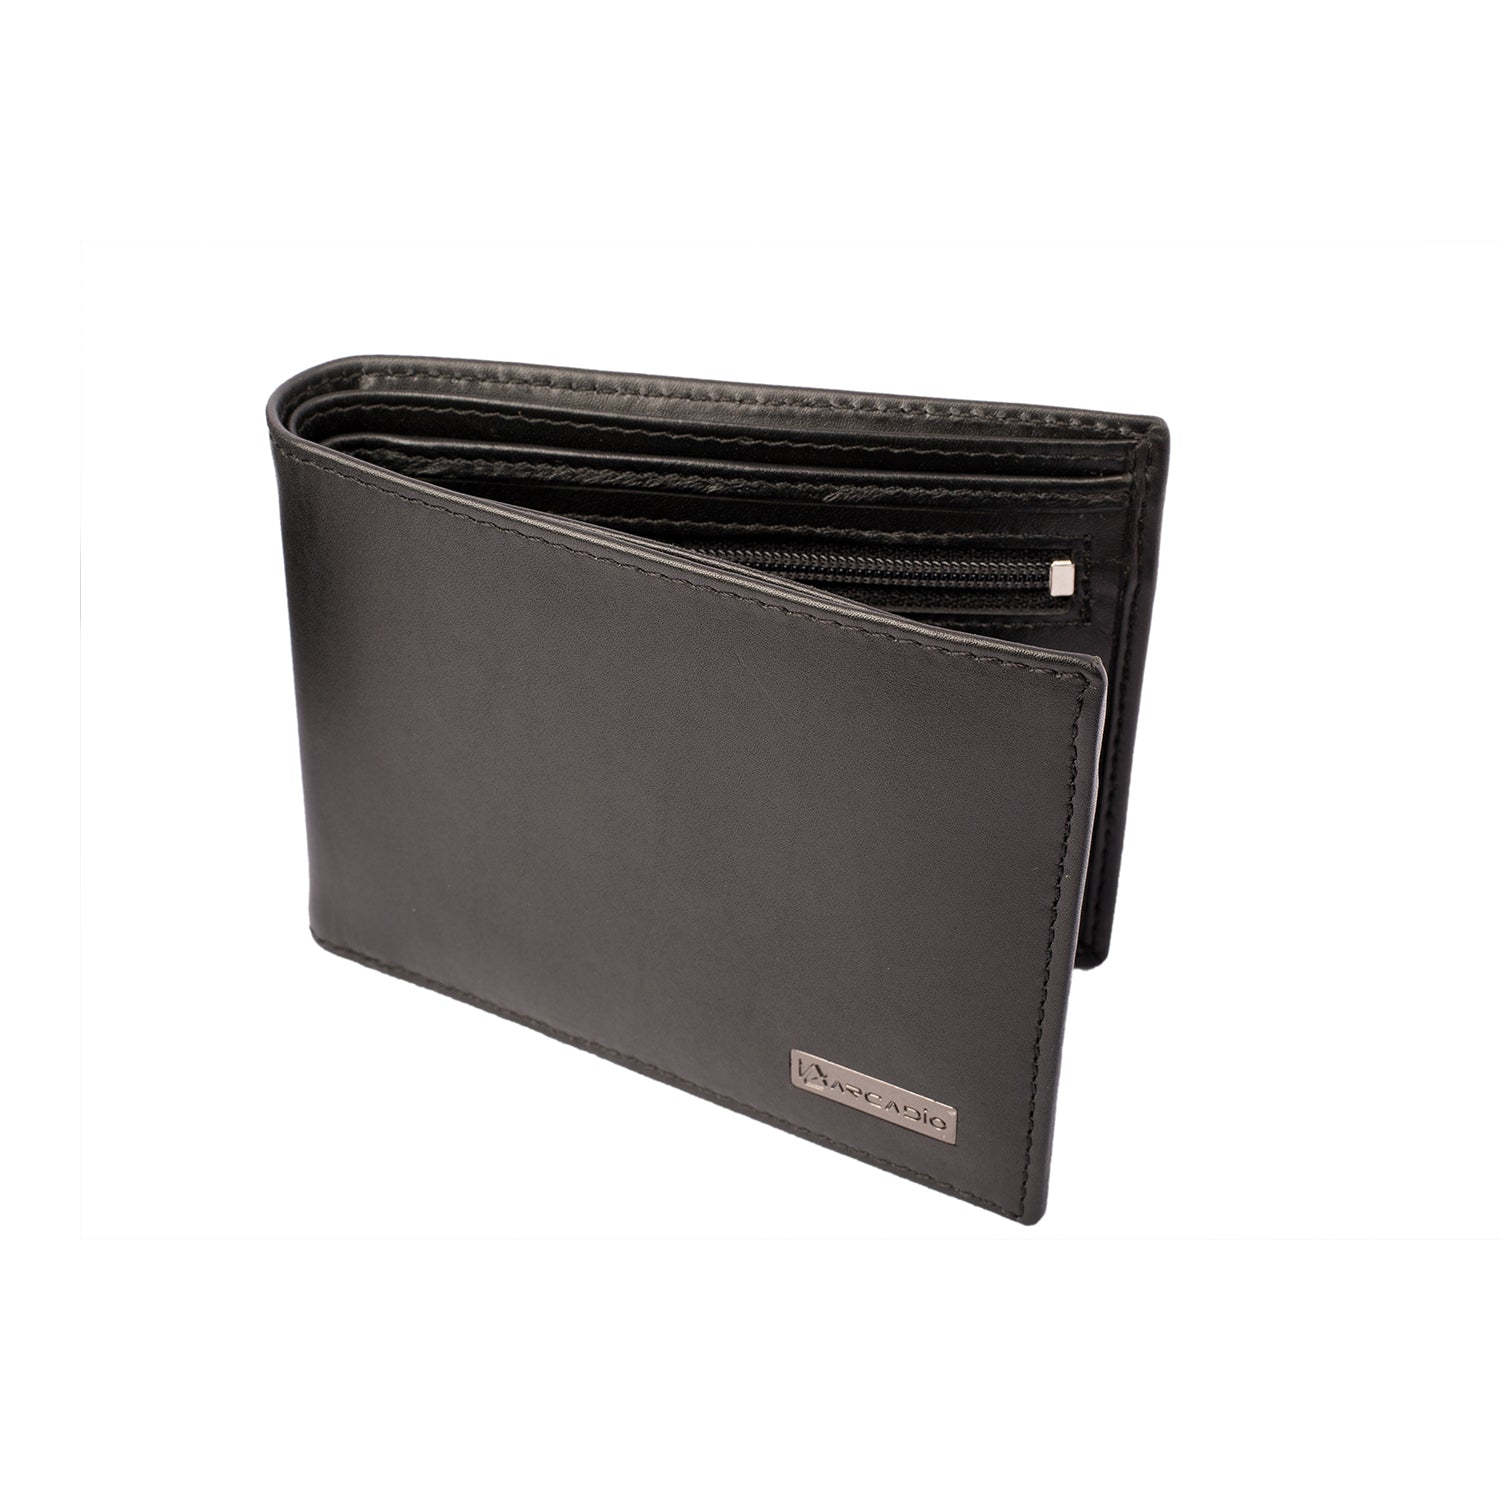 BLACK MAGIC Leather Wallet ARW1002BK ARCADIO